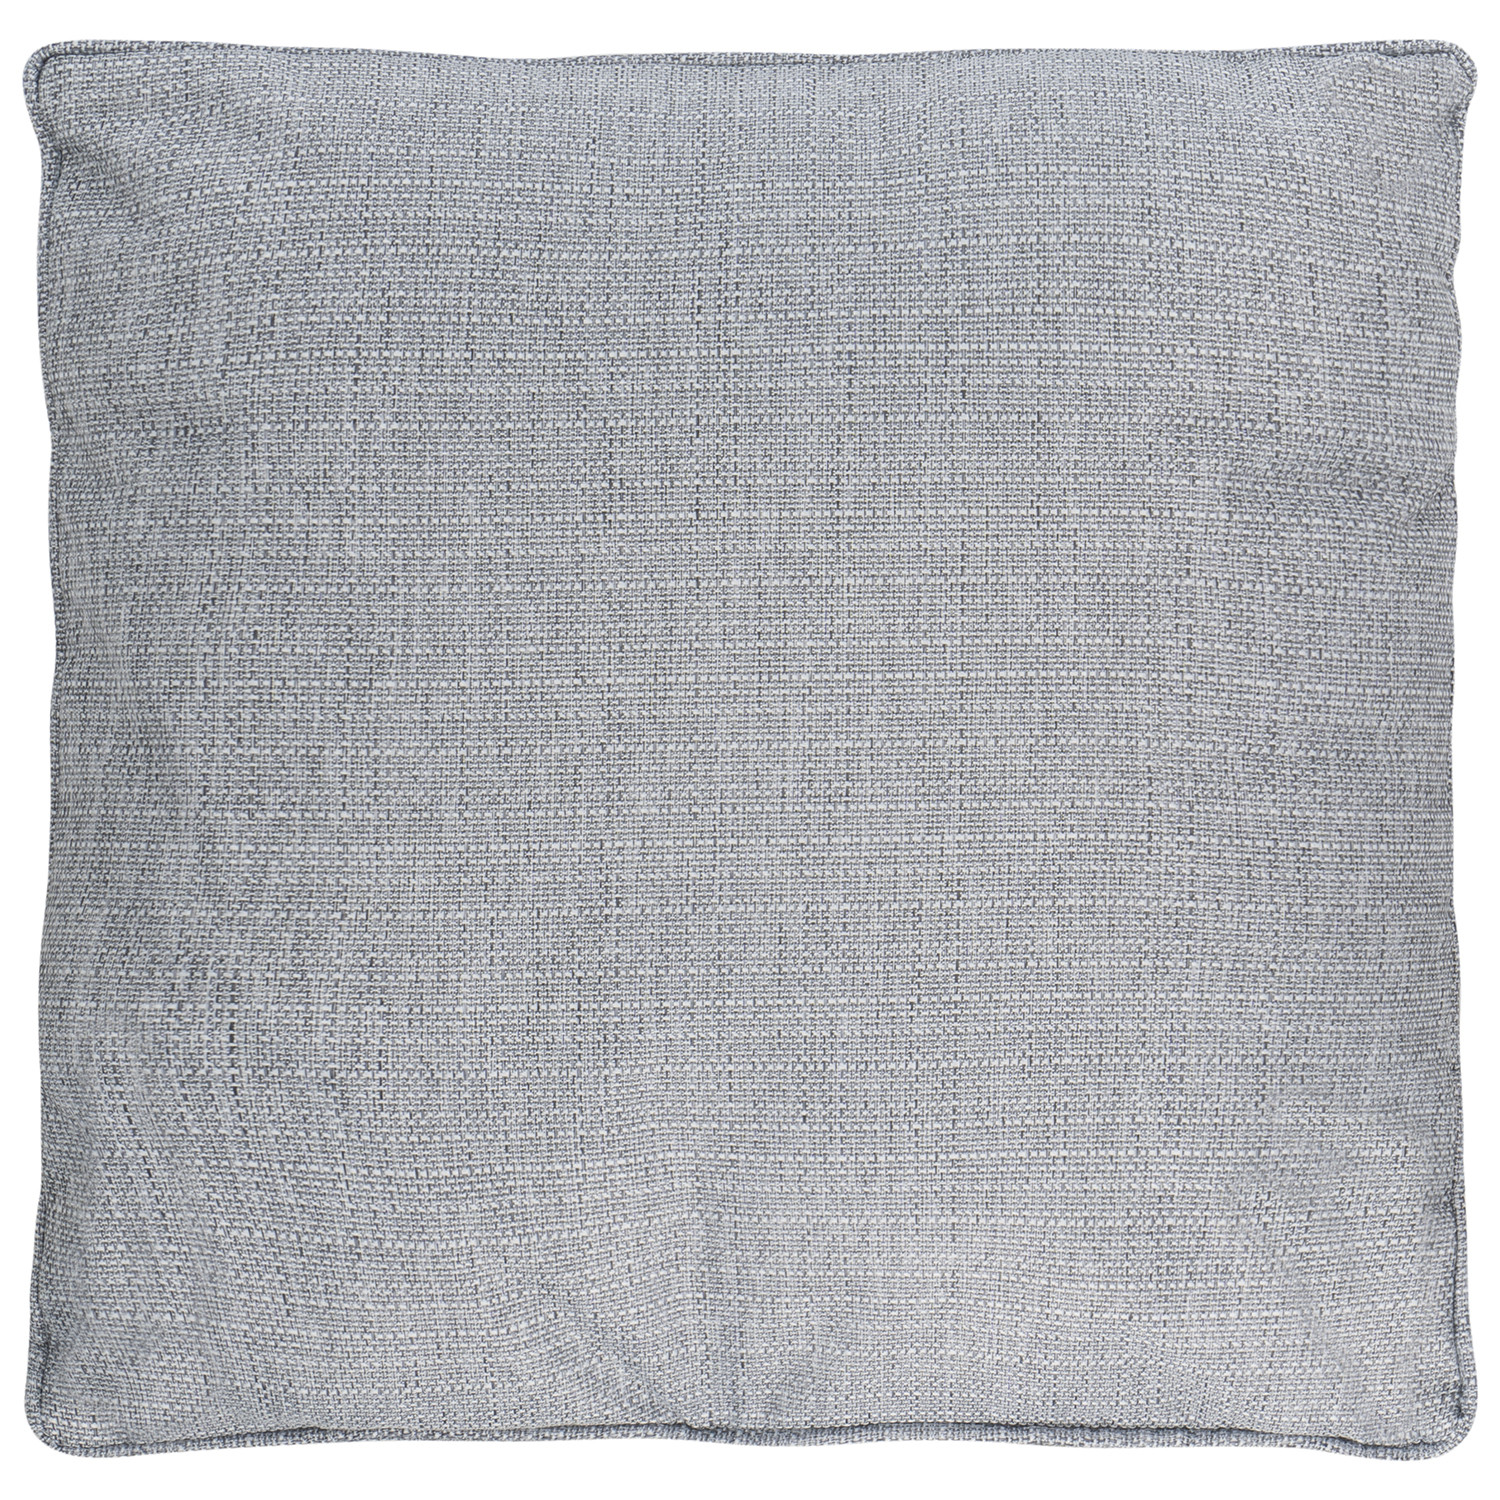 Divante Grey Hoxton Cushion 45 x 45cm Image 1